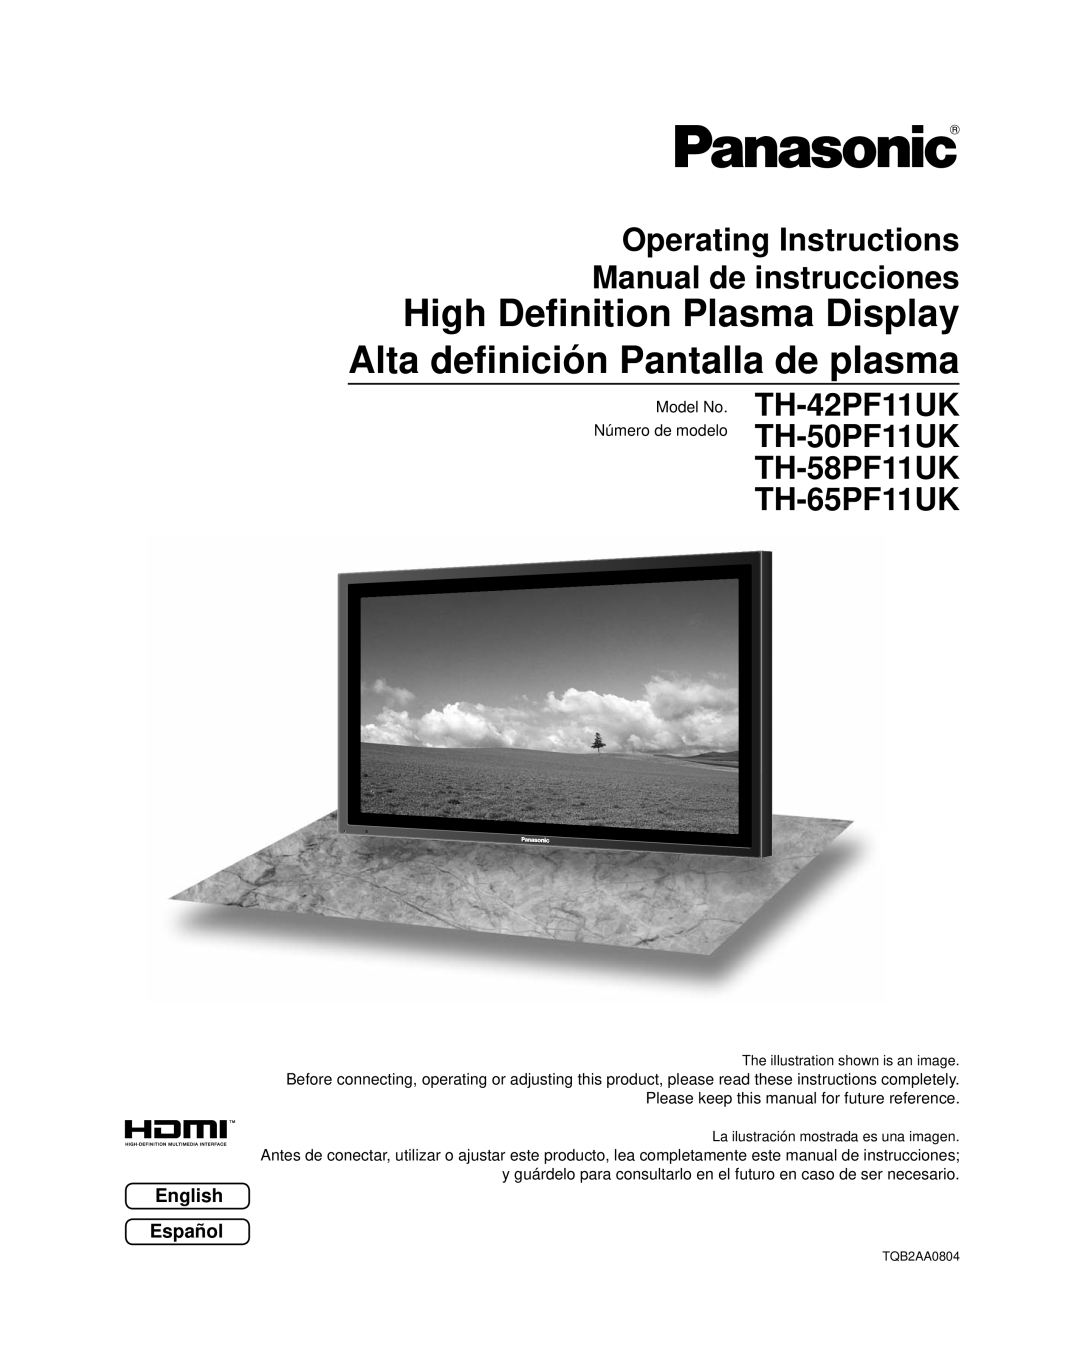 Panasonic TH-58PF11UK, TH-65PF11UK manual High Deﬁnition Plasma Display Alta deﬁnición Pantalla de plasma, English Español 